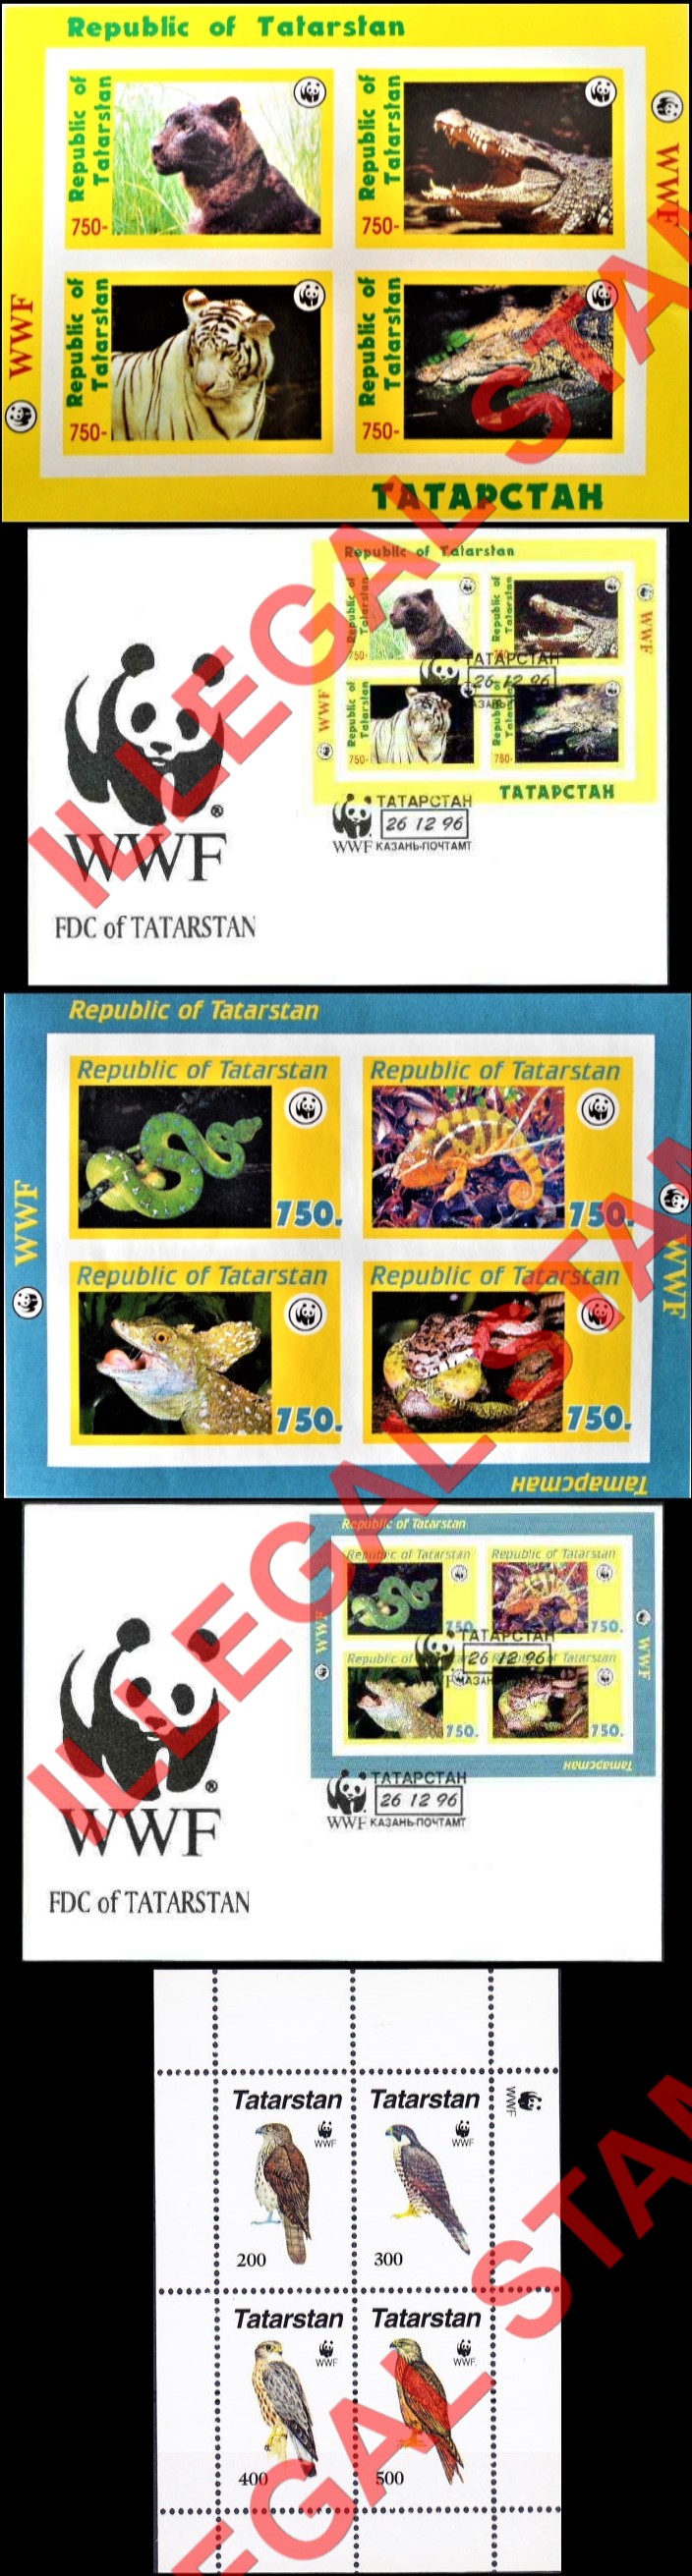 Republic of Tatarstan 1996 Counterfeit Illegal Stamps